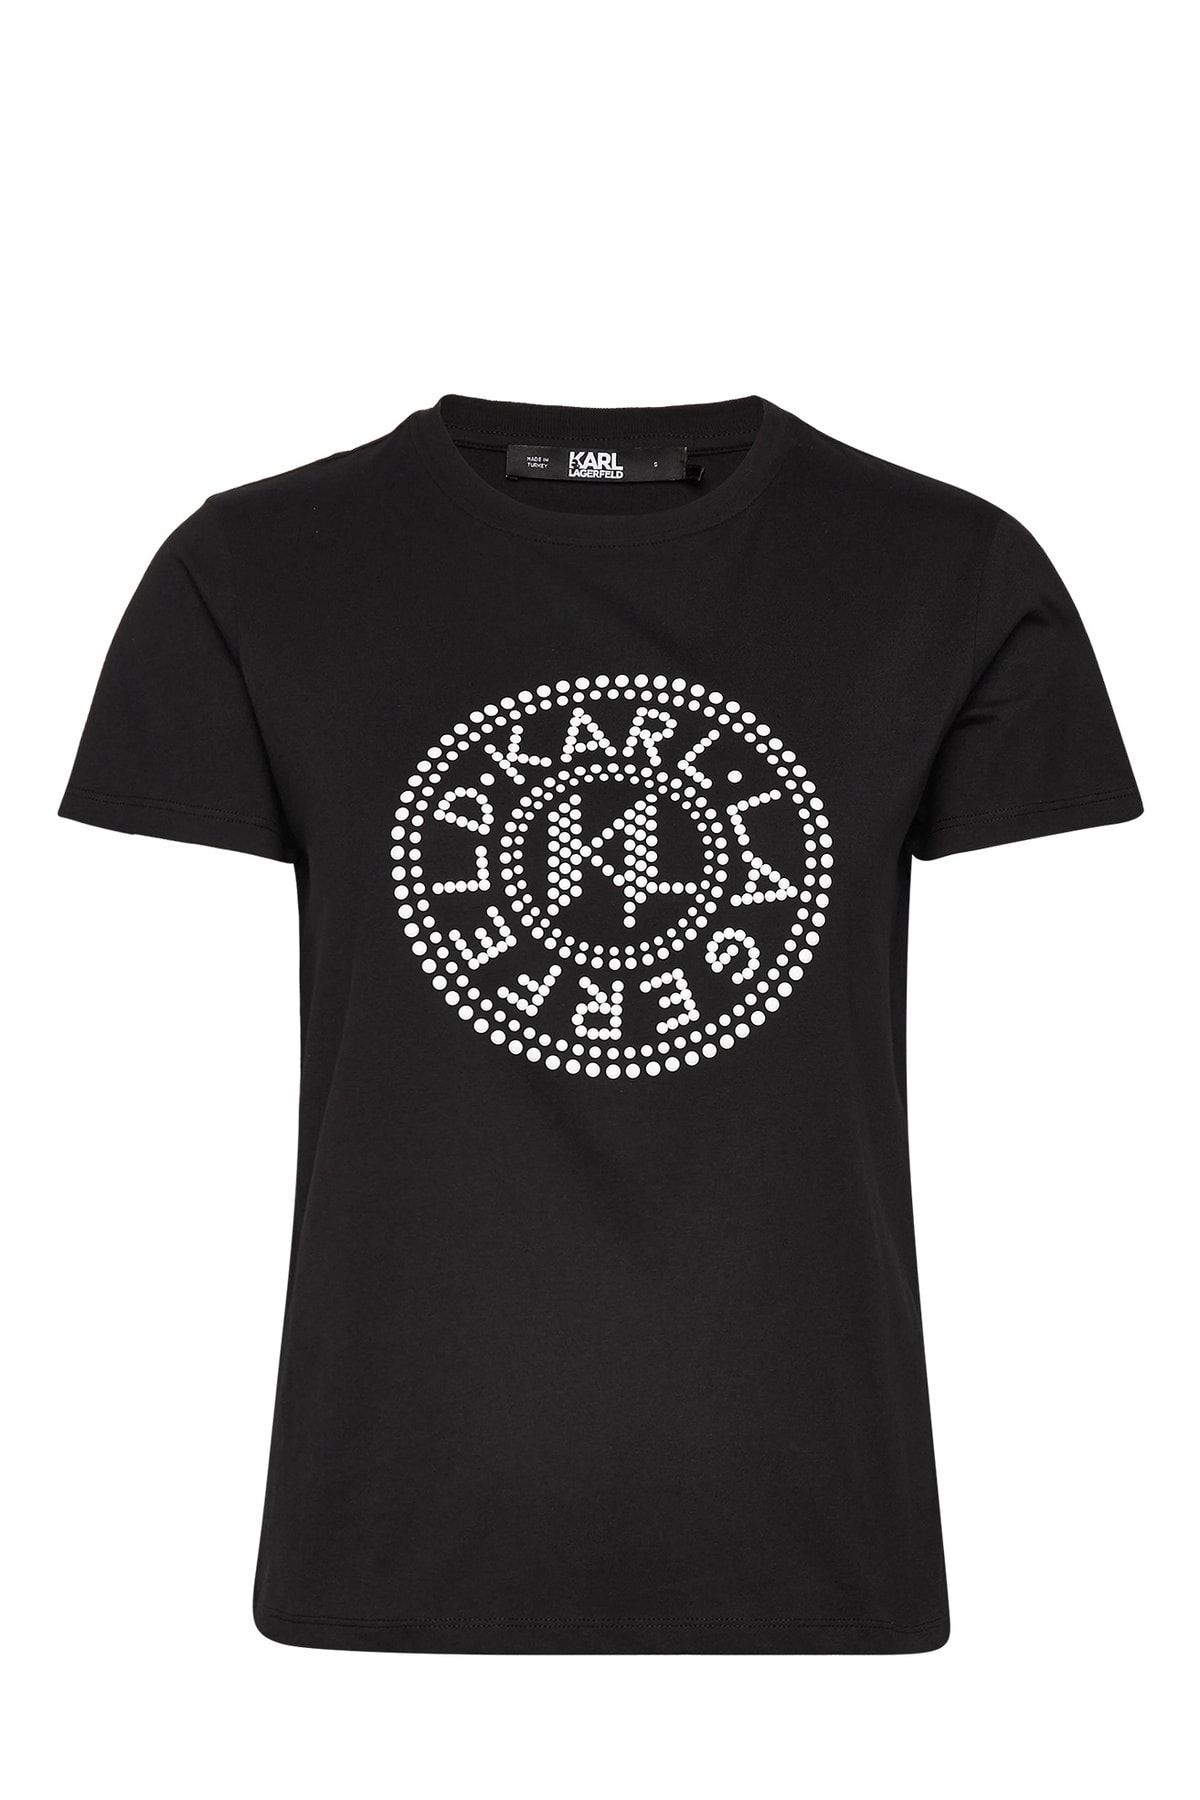 Karl Lagerfeld Bisiklet Yaka Baskılı Siyah Kadın T-Shirt 231W1712